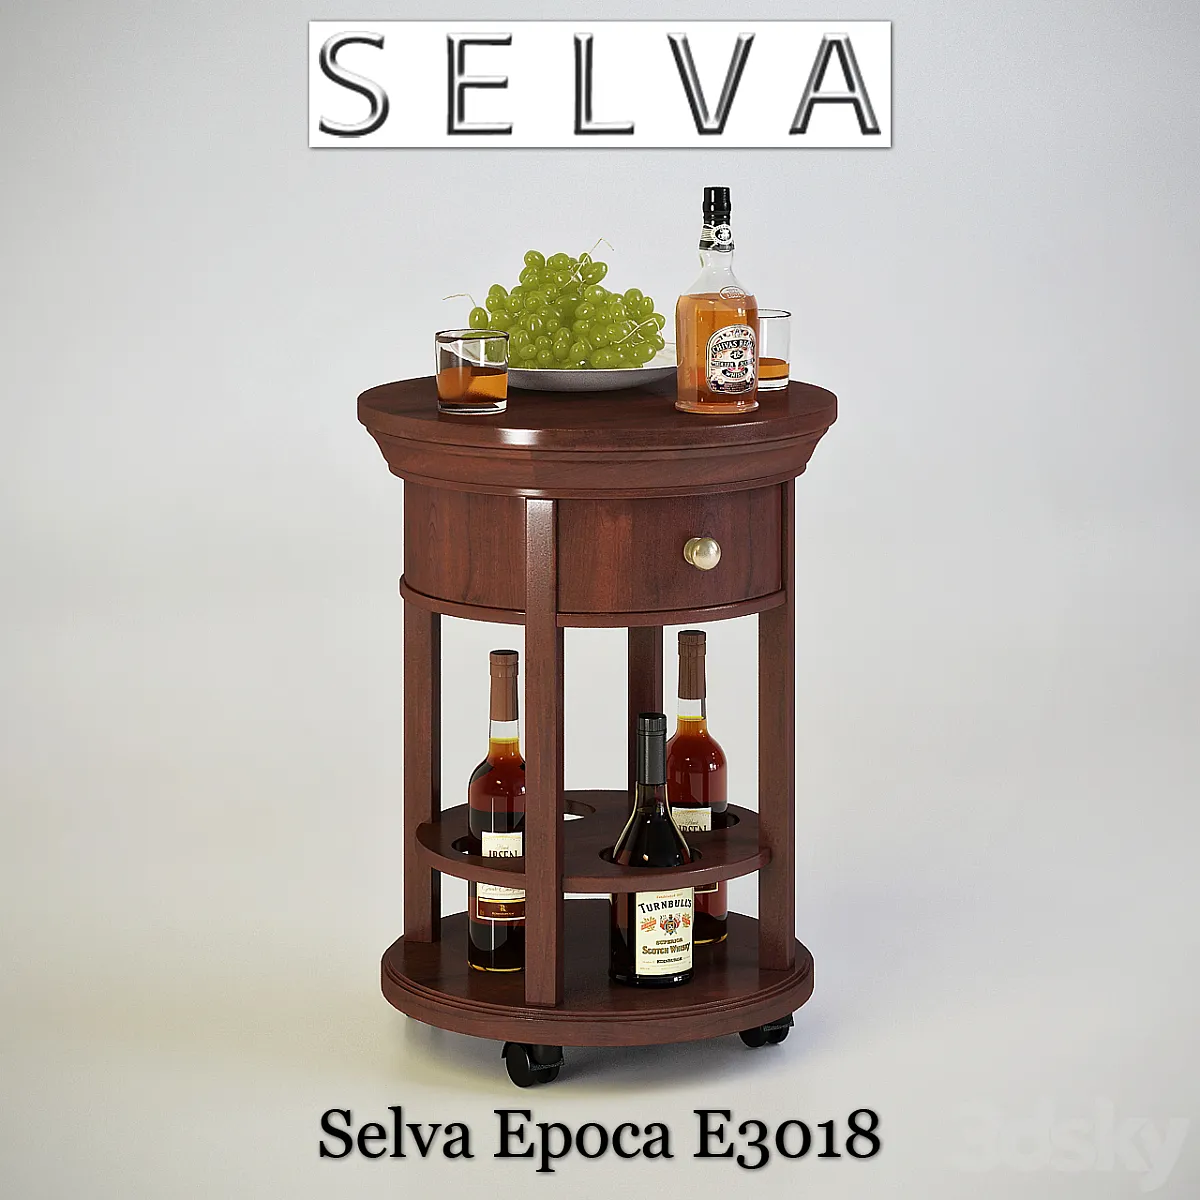 3dsky - Selva Epoca E3018 minibar